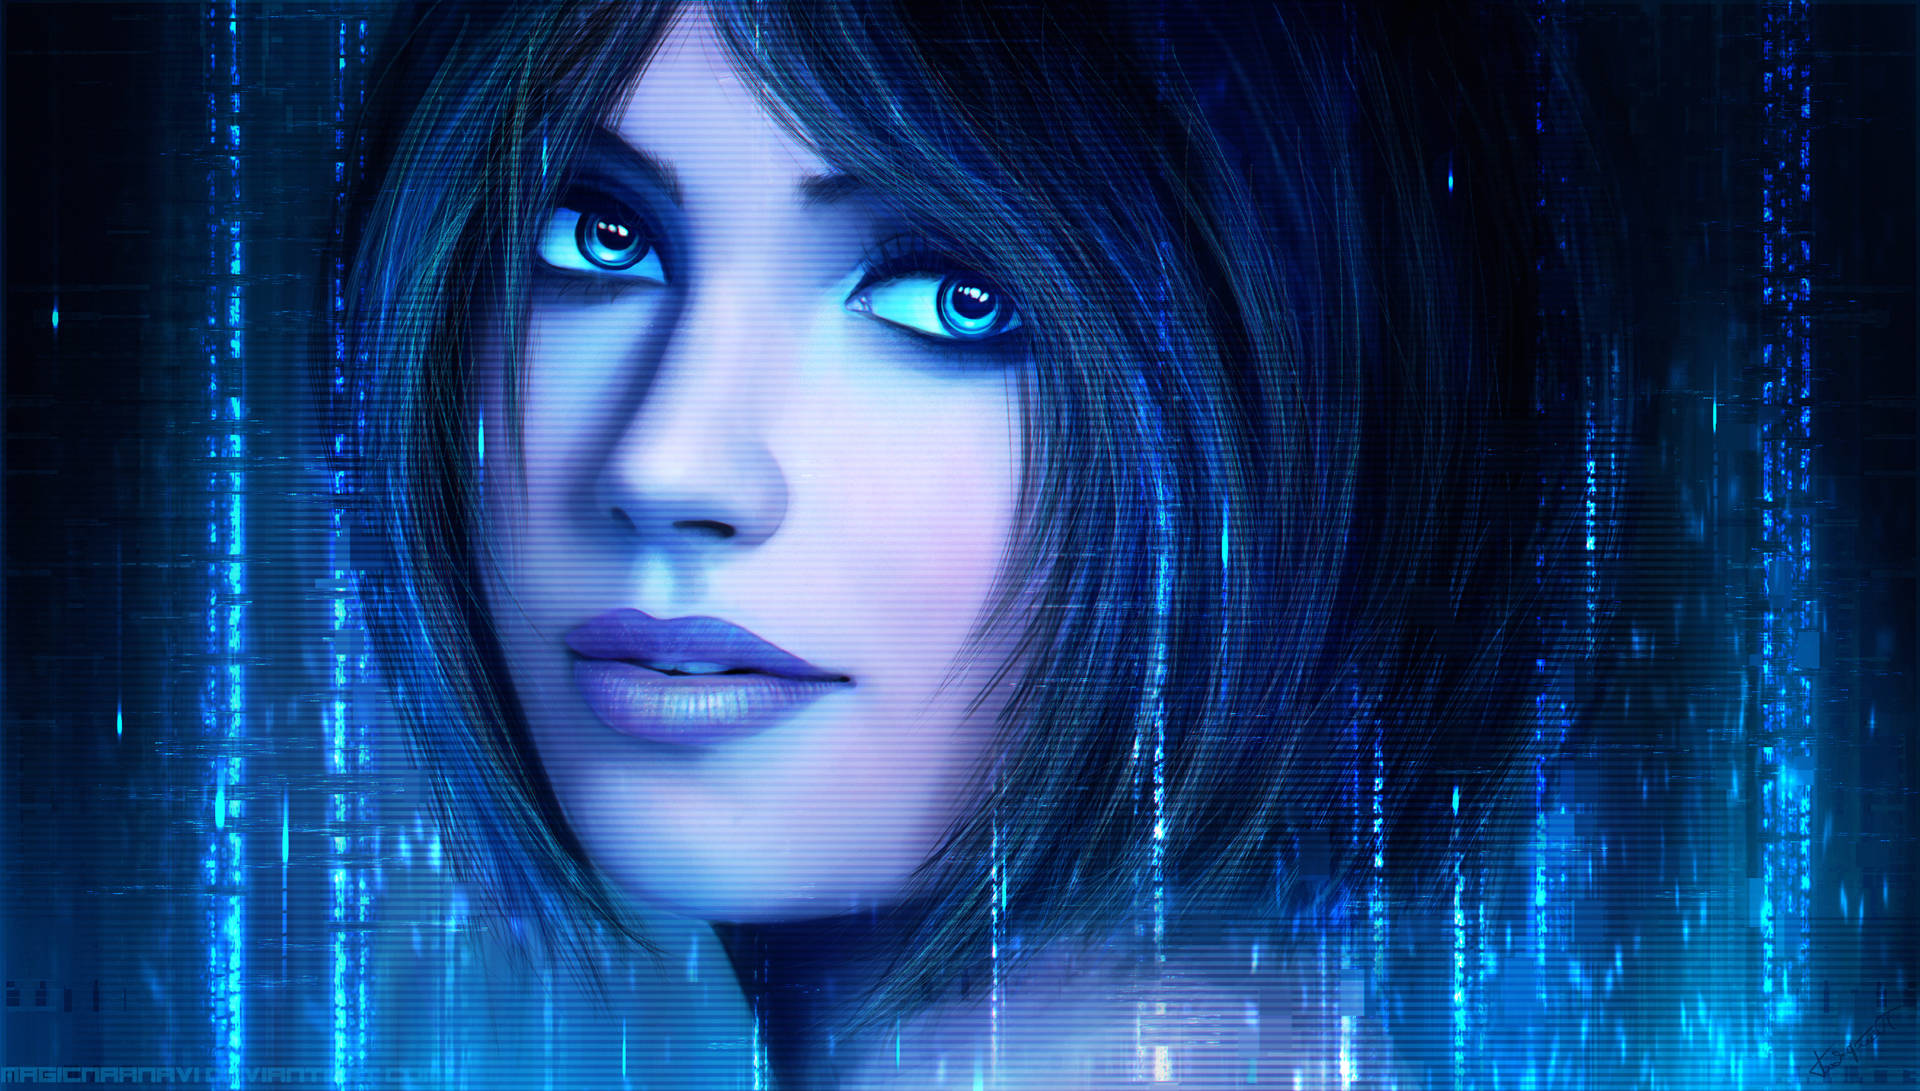 Halo 4 Cortana Artificial Intelligence Background